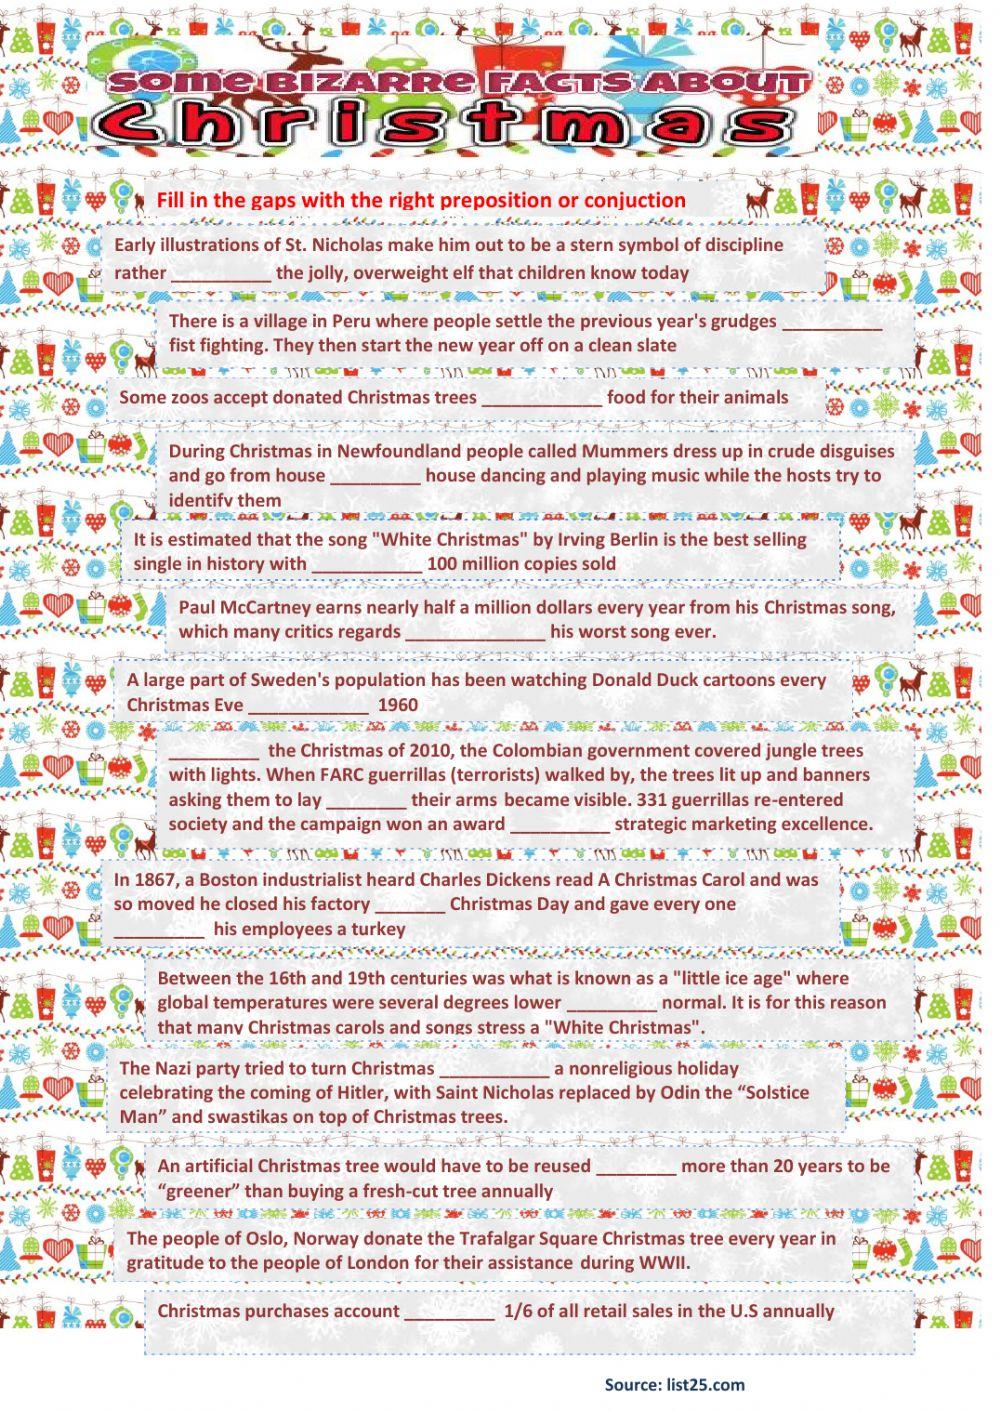 Christmas facts - multiple choice